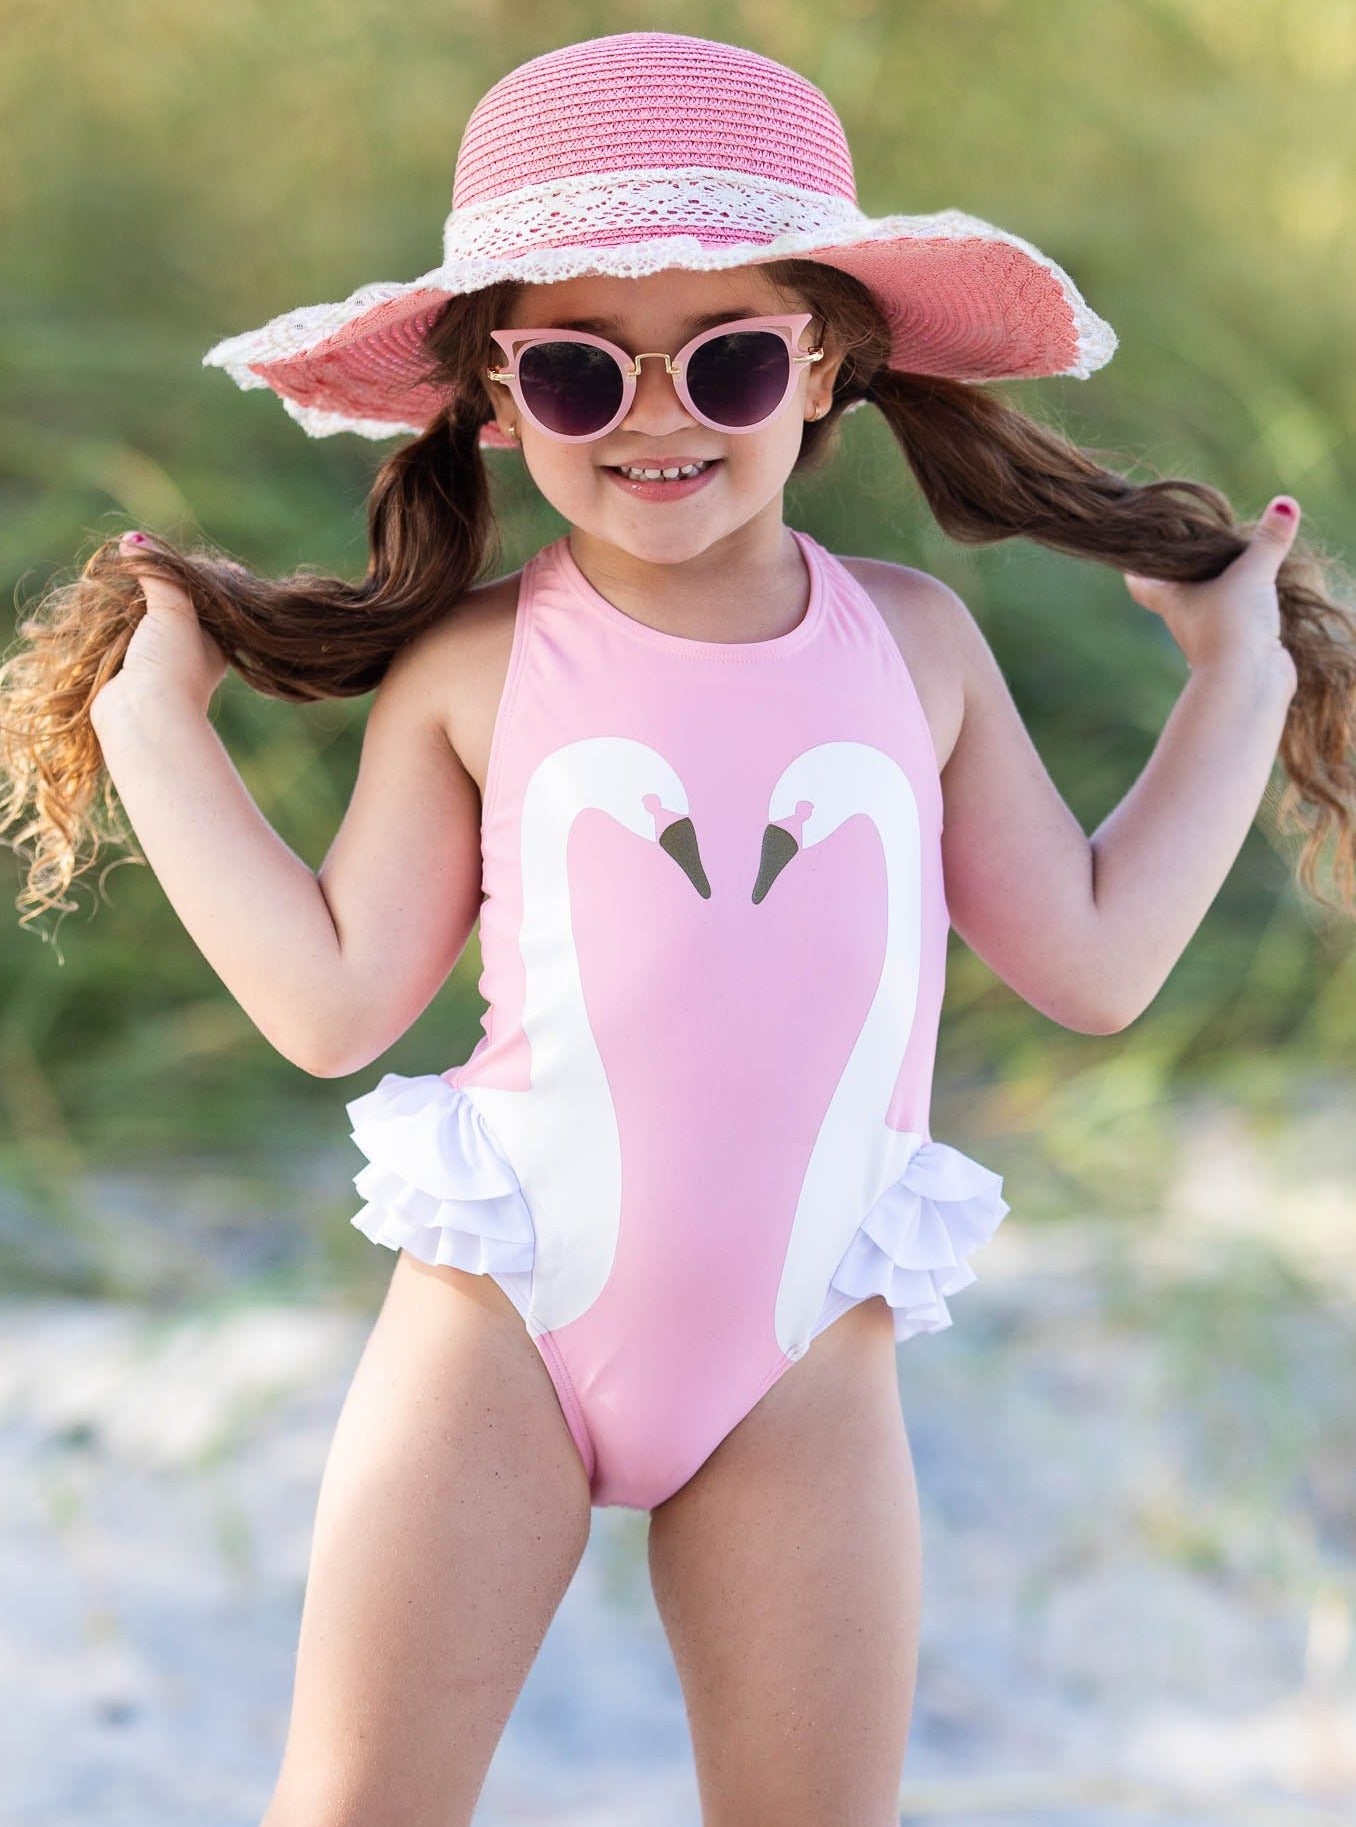 Happy Princess Pink Gingham Swimsuit Girls Swimwear Beachwear